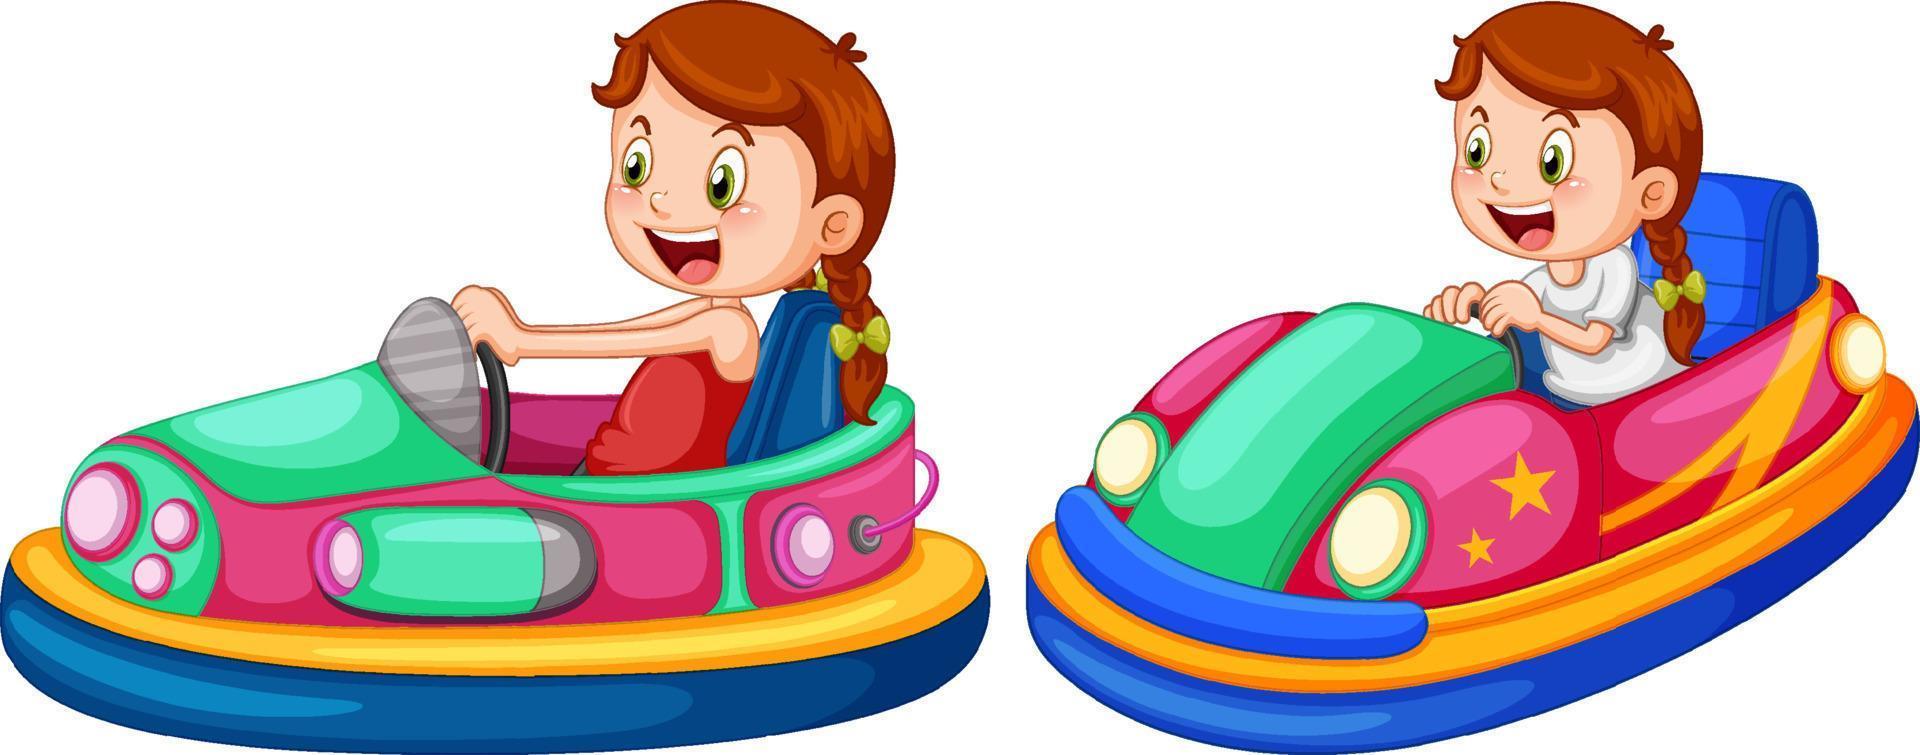 Kids riding bumper cars cartoon design vector